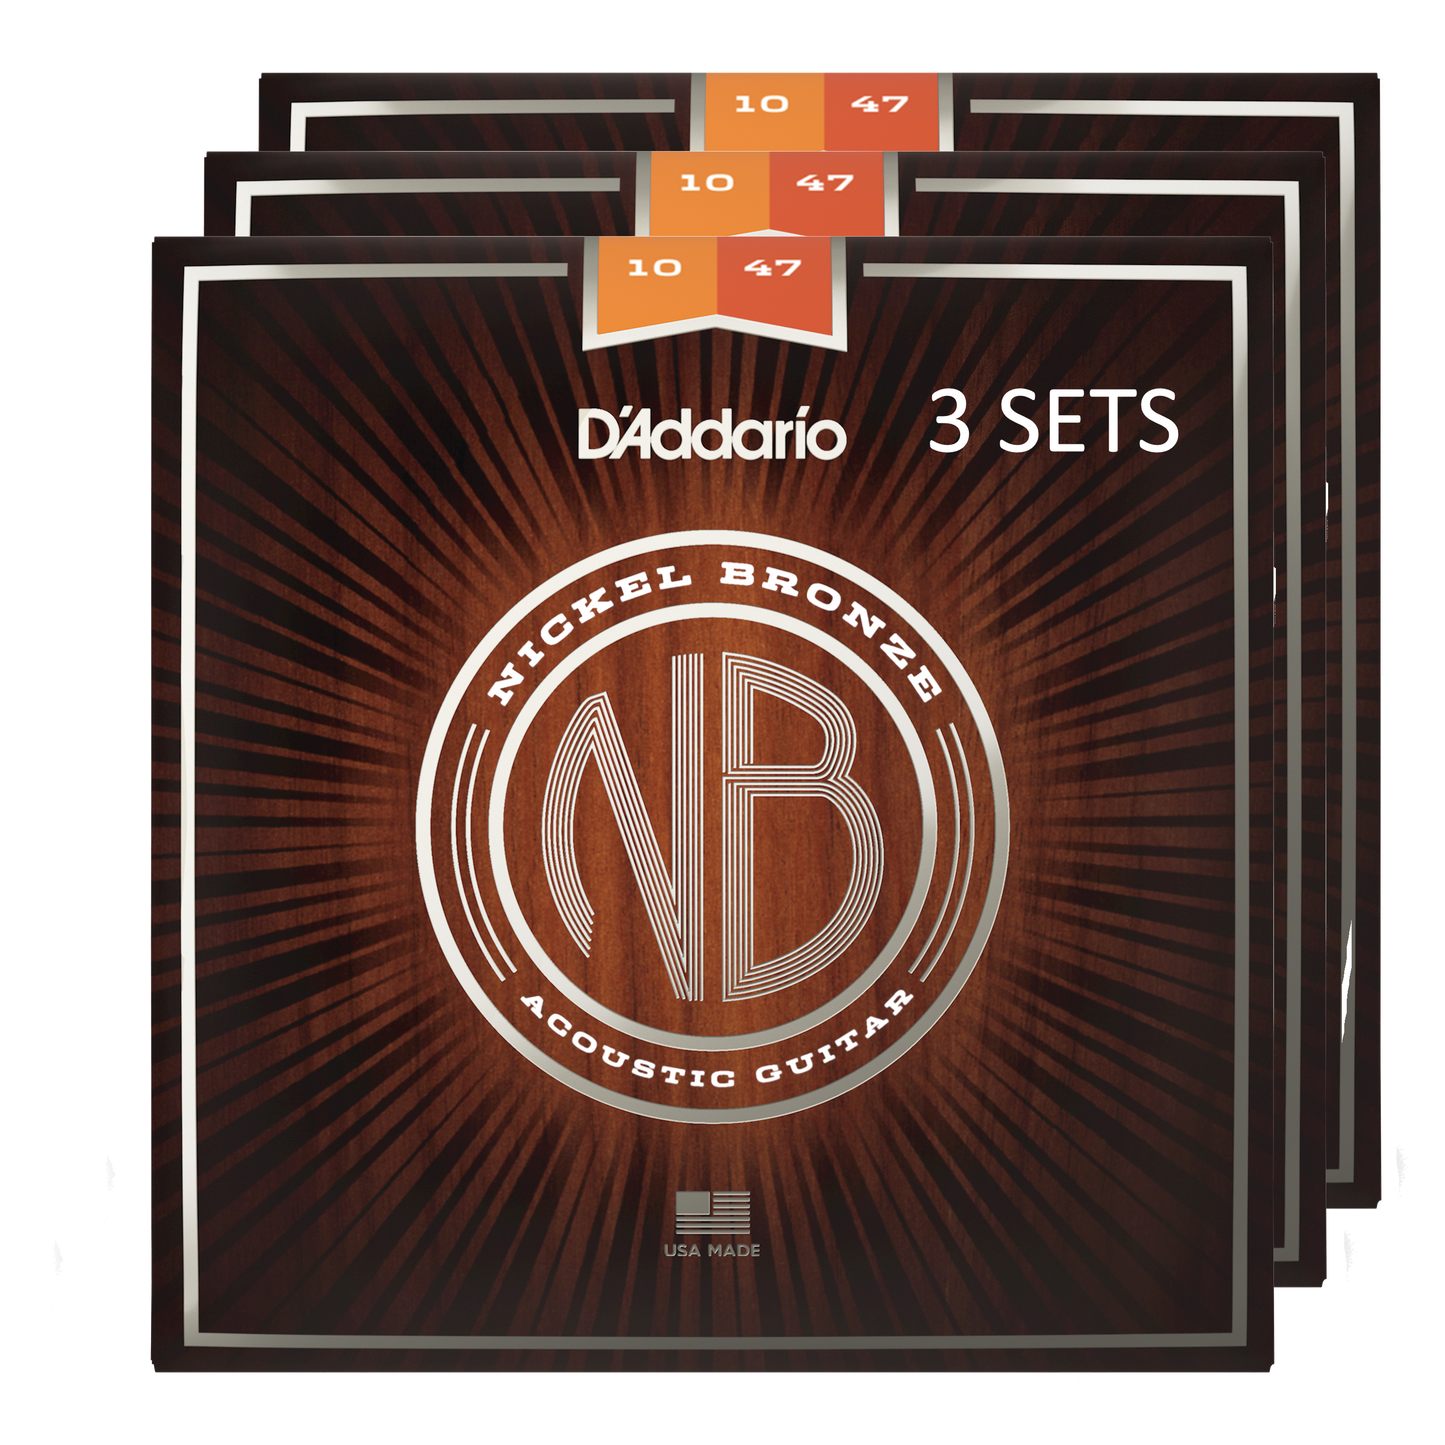 D'Addario NB1047-3P Nickel Bronze Acoustic Guitar Strings, Extra-Light 10-47 (3-SETS)